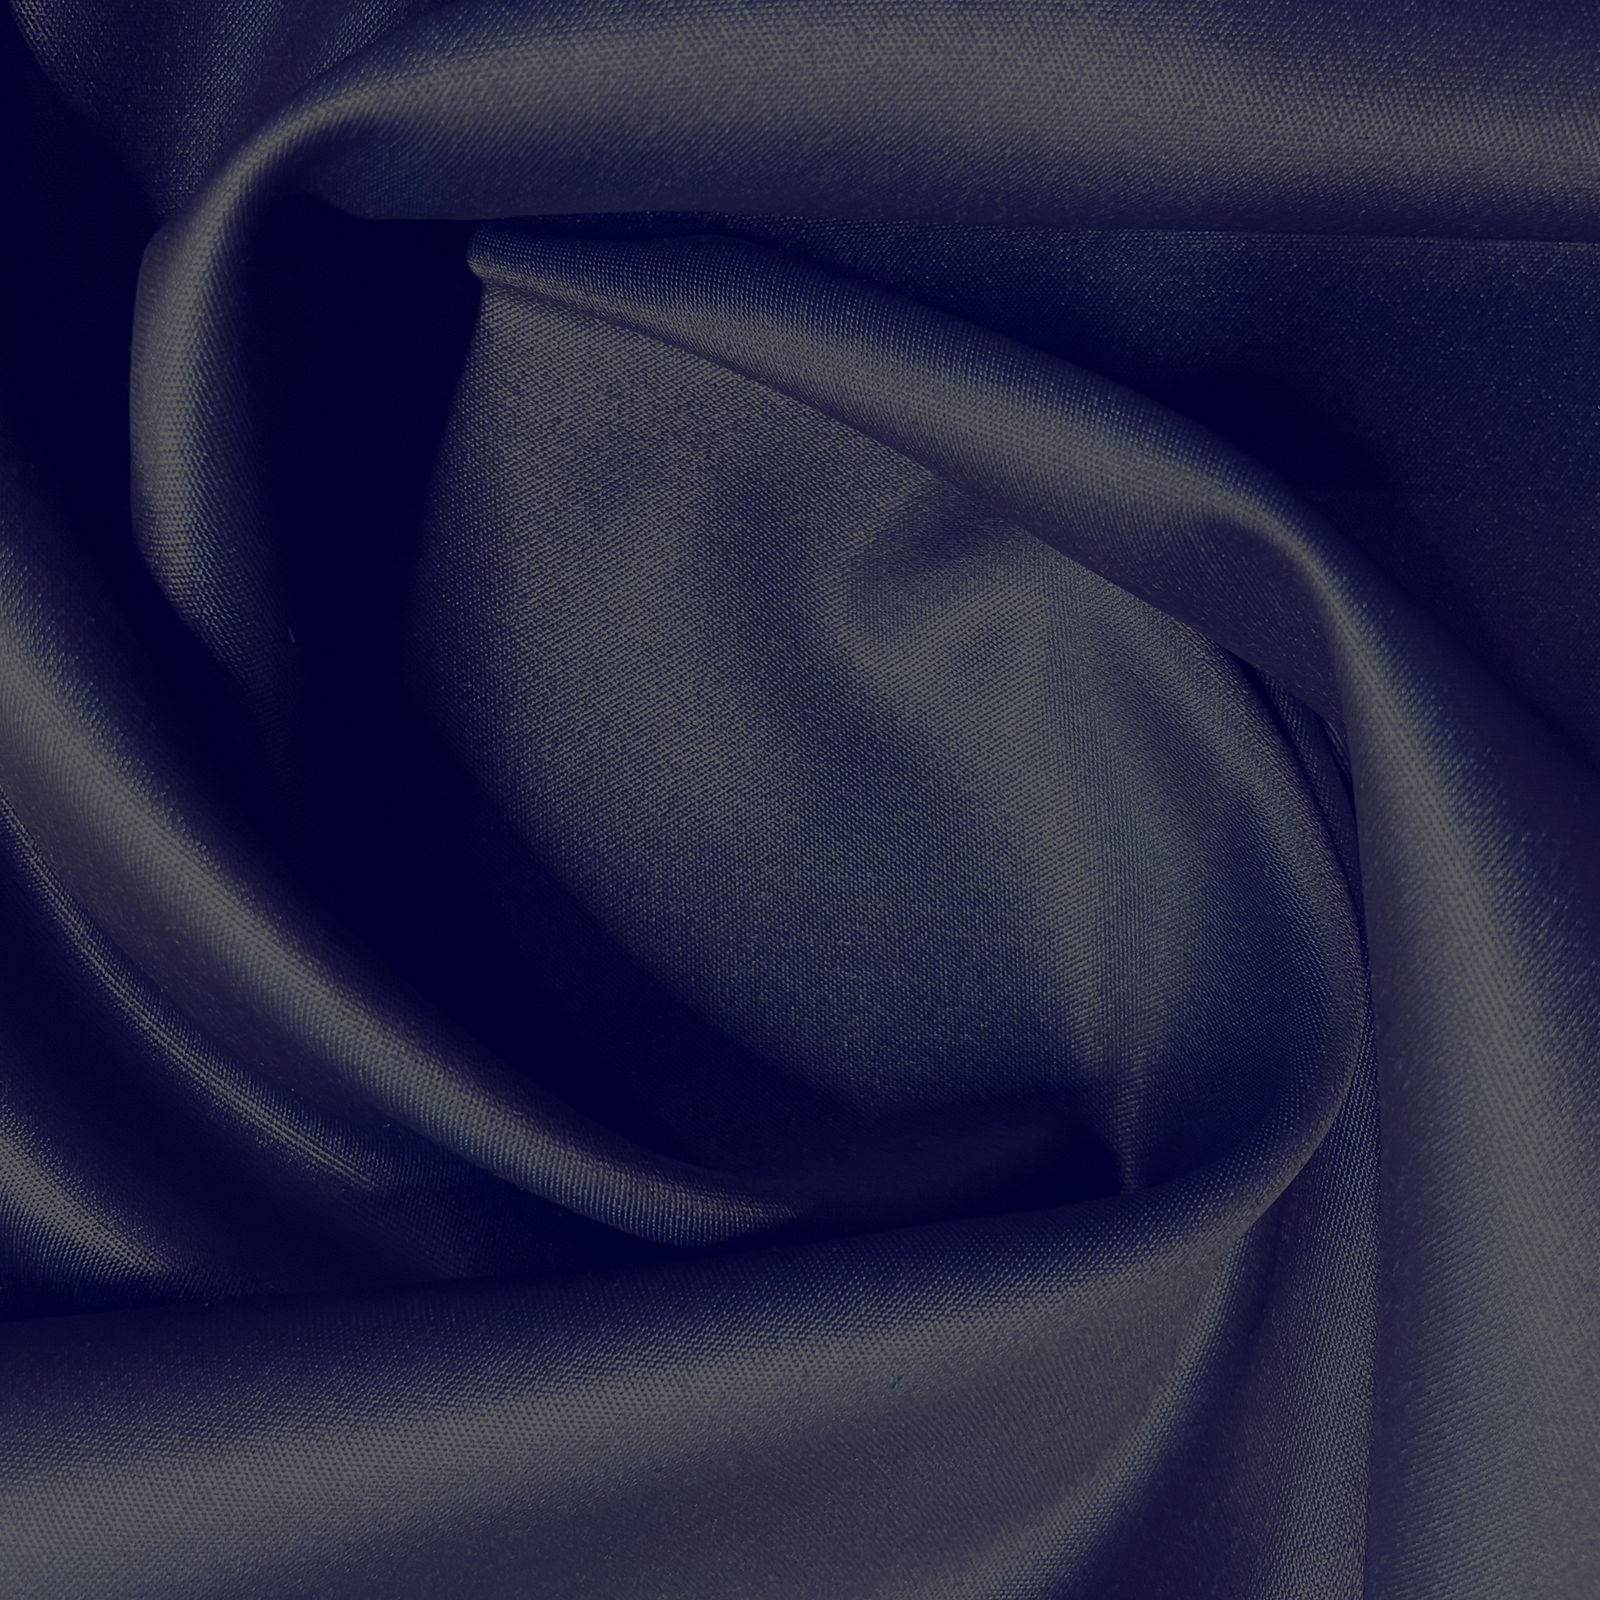 Buy Polyester Viscose Fabric Online at Best Price – TradeUNO Fabrics